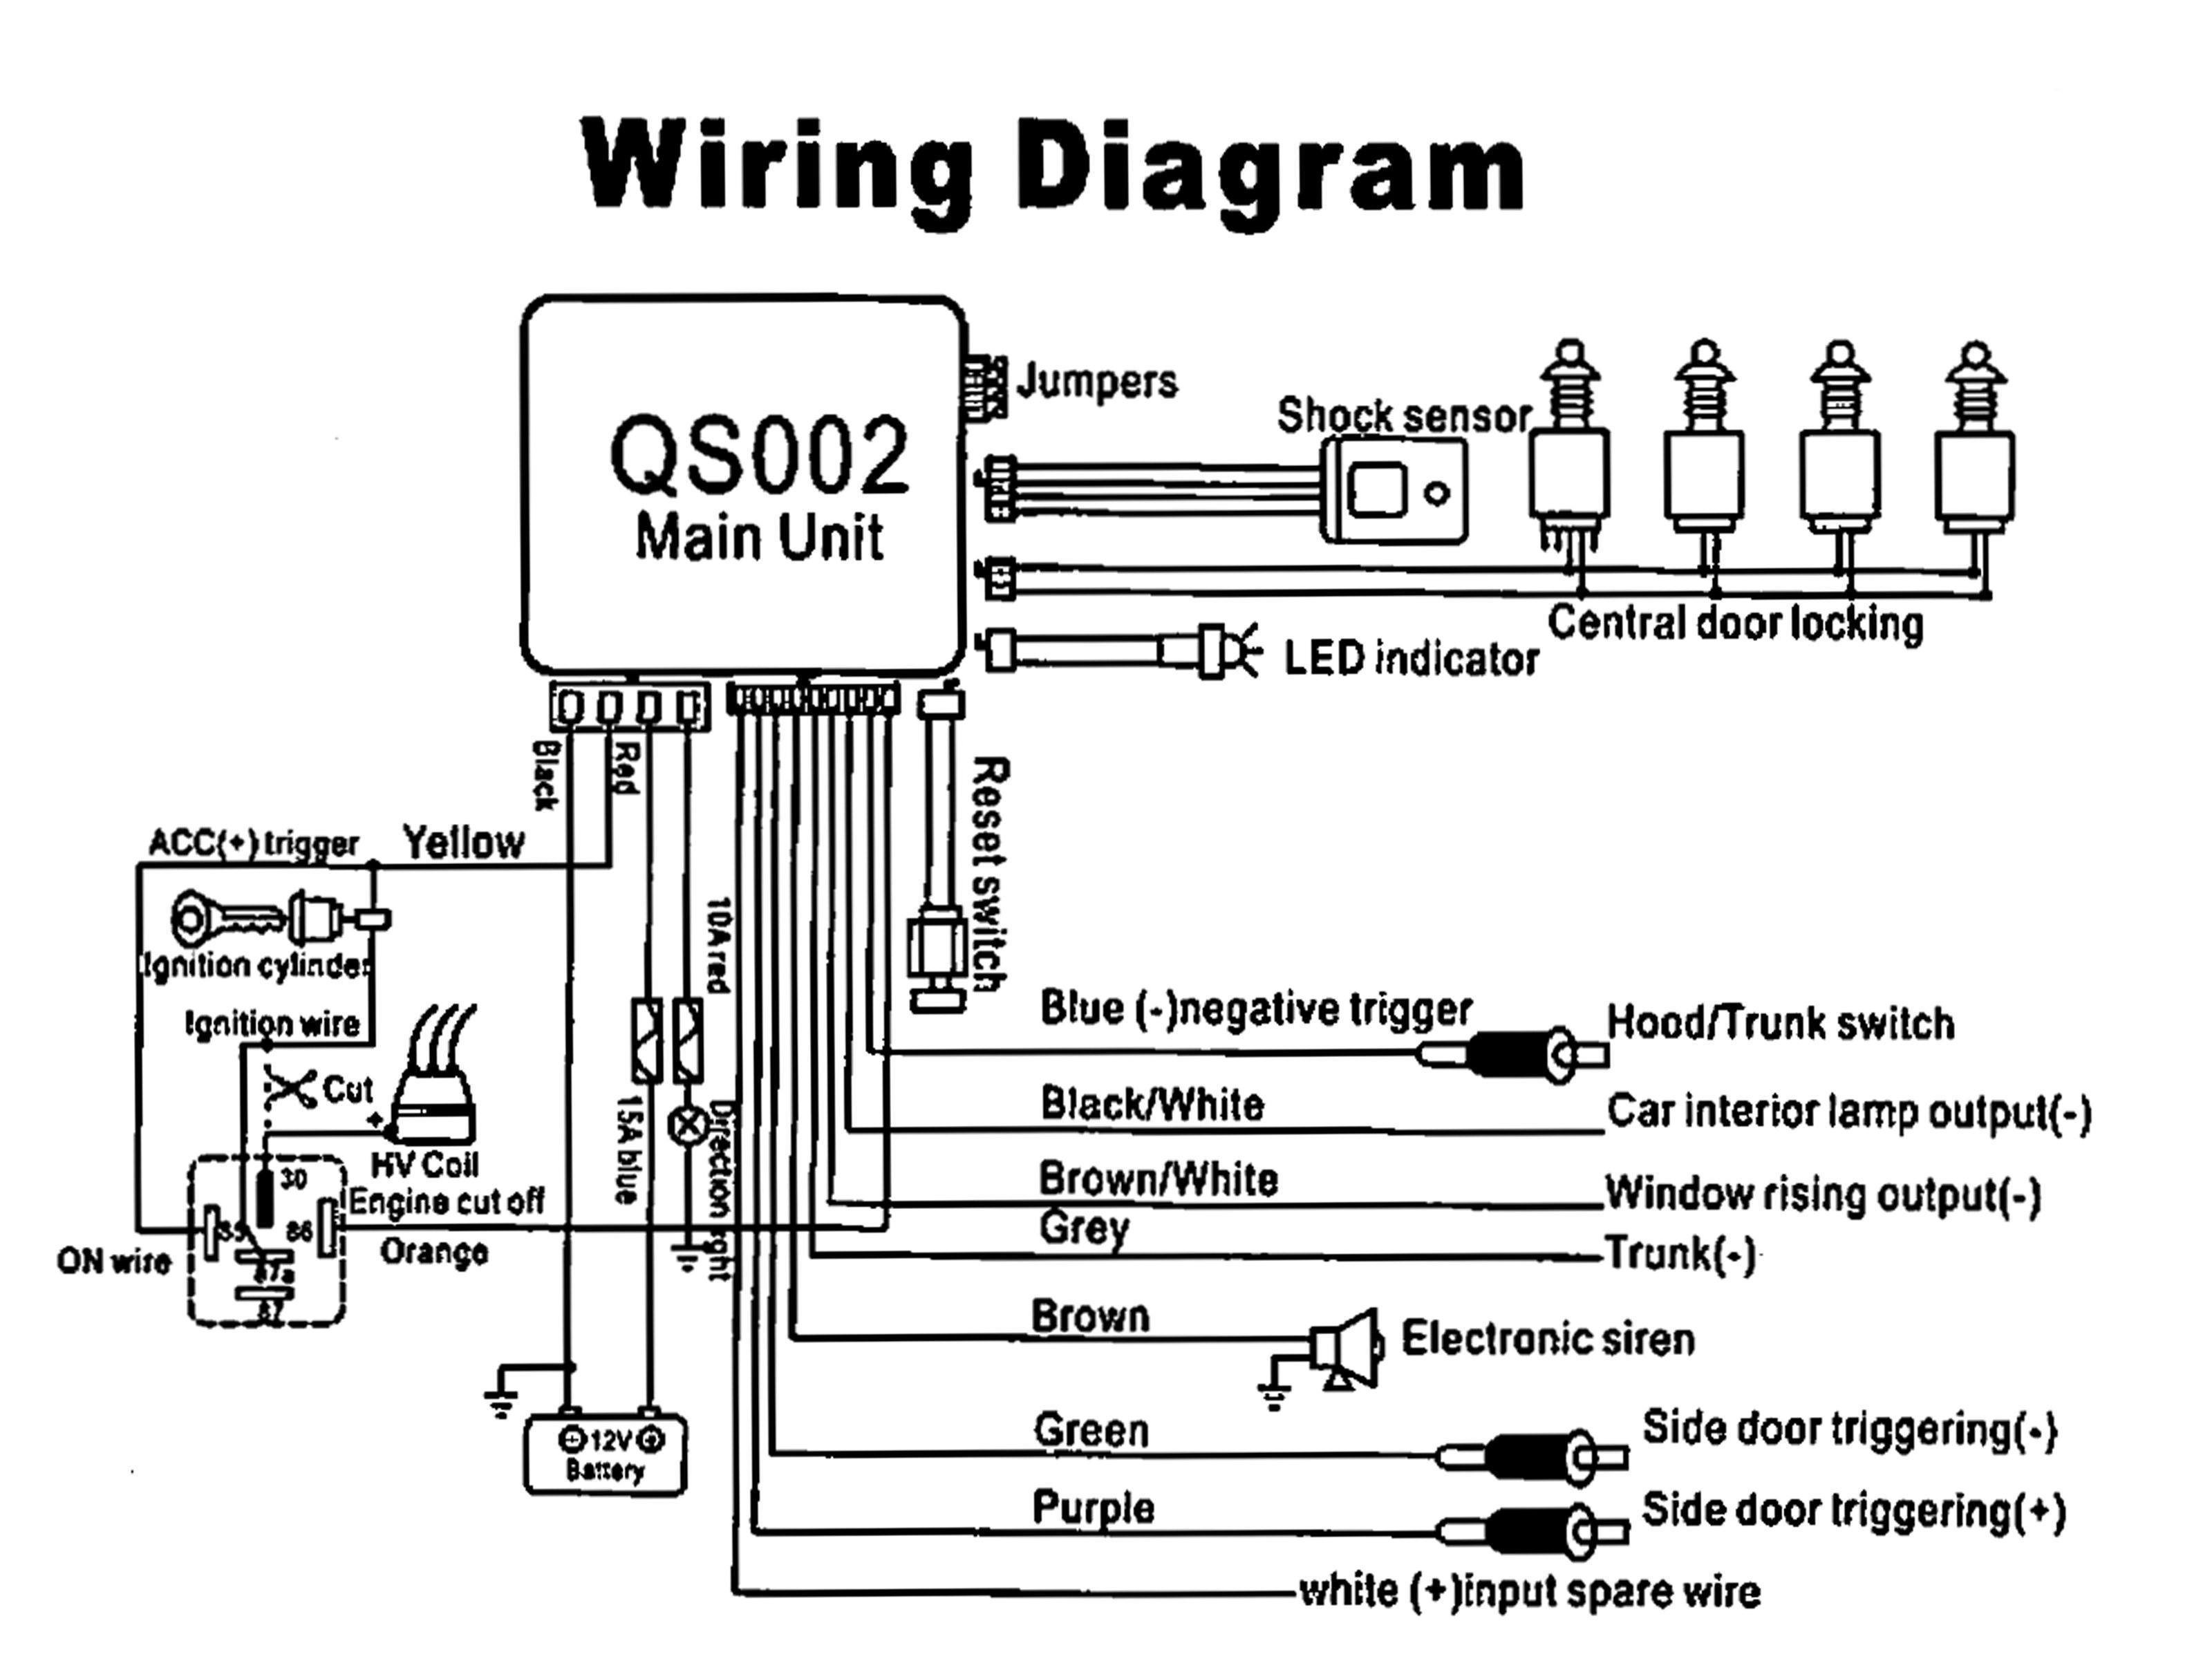 Car Alarm Installation Diagram Wiring Diagram for Car Alarm Wiring Diagram toolbox Of Car Alarm Installation Diagram